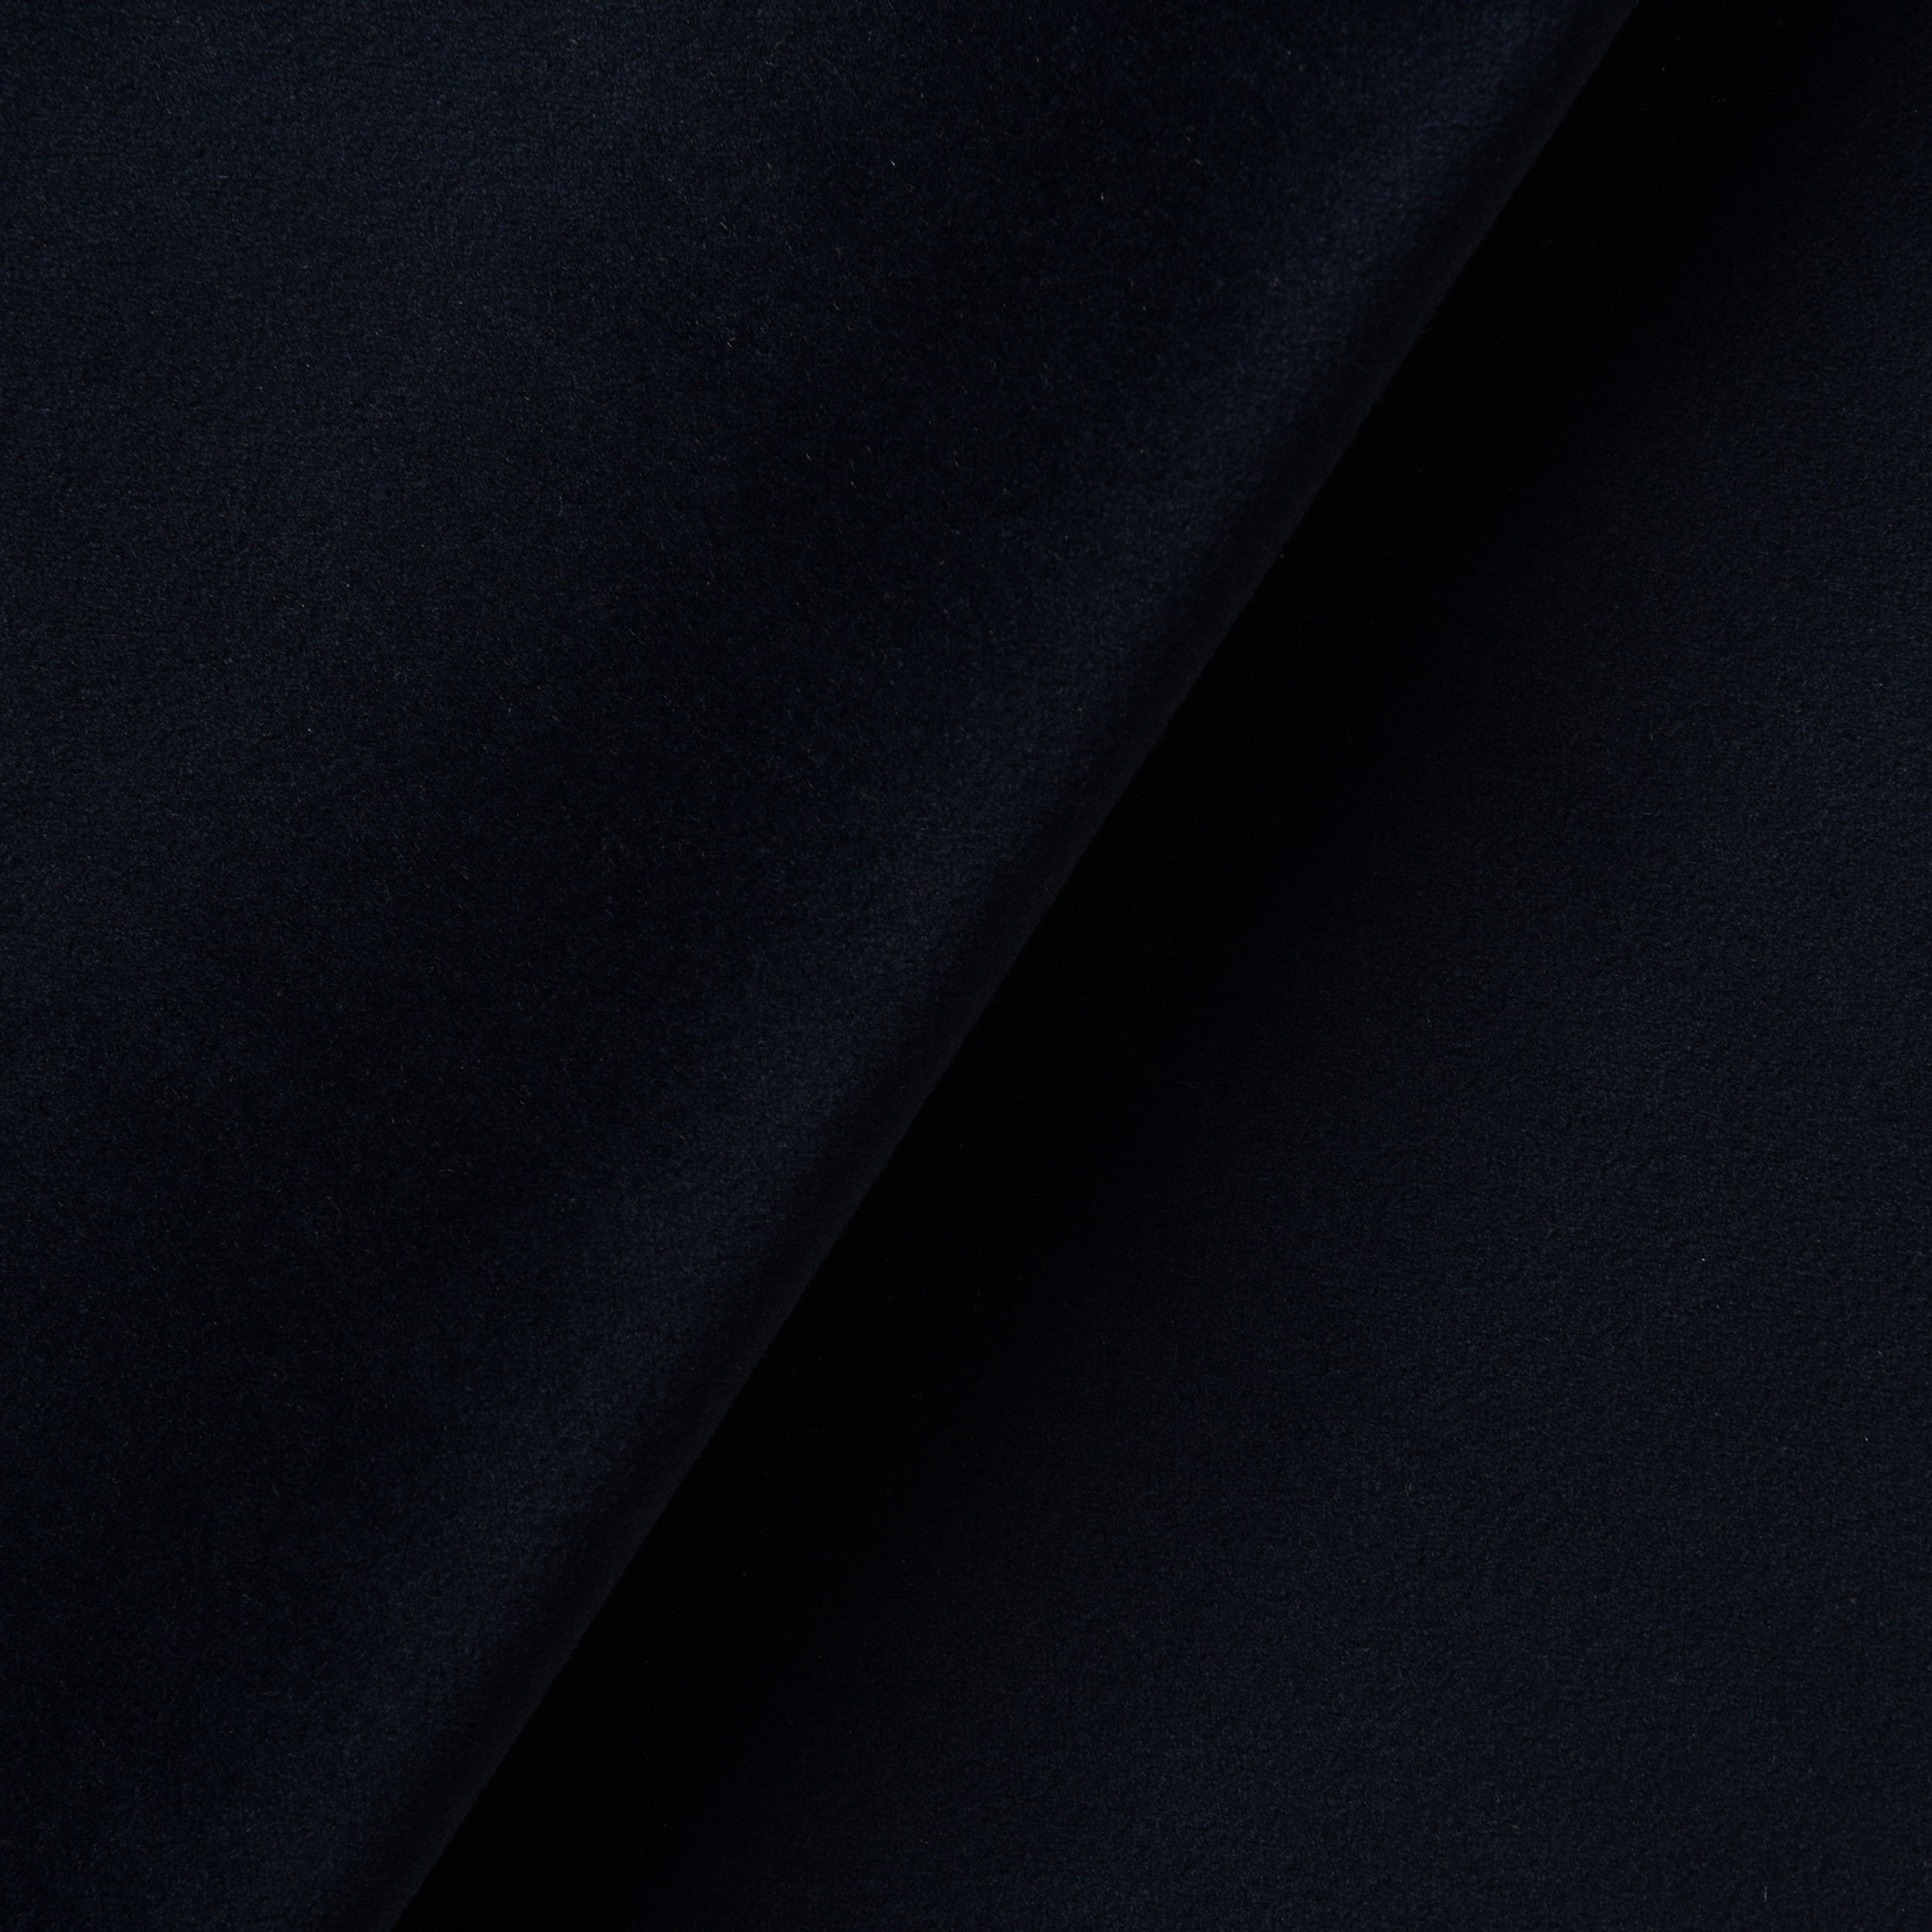 Jennifer Taylor 2x2 in. Anthracite Black Velvet Fabric Swatch Sample